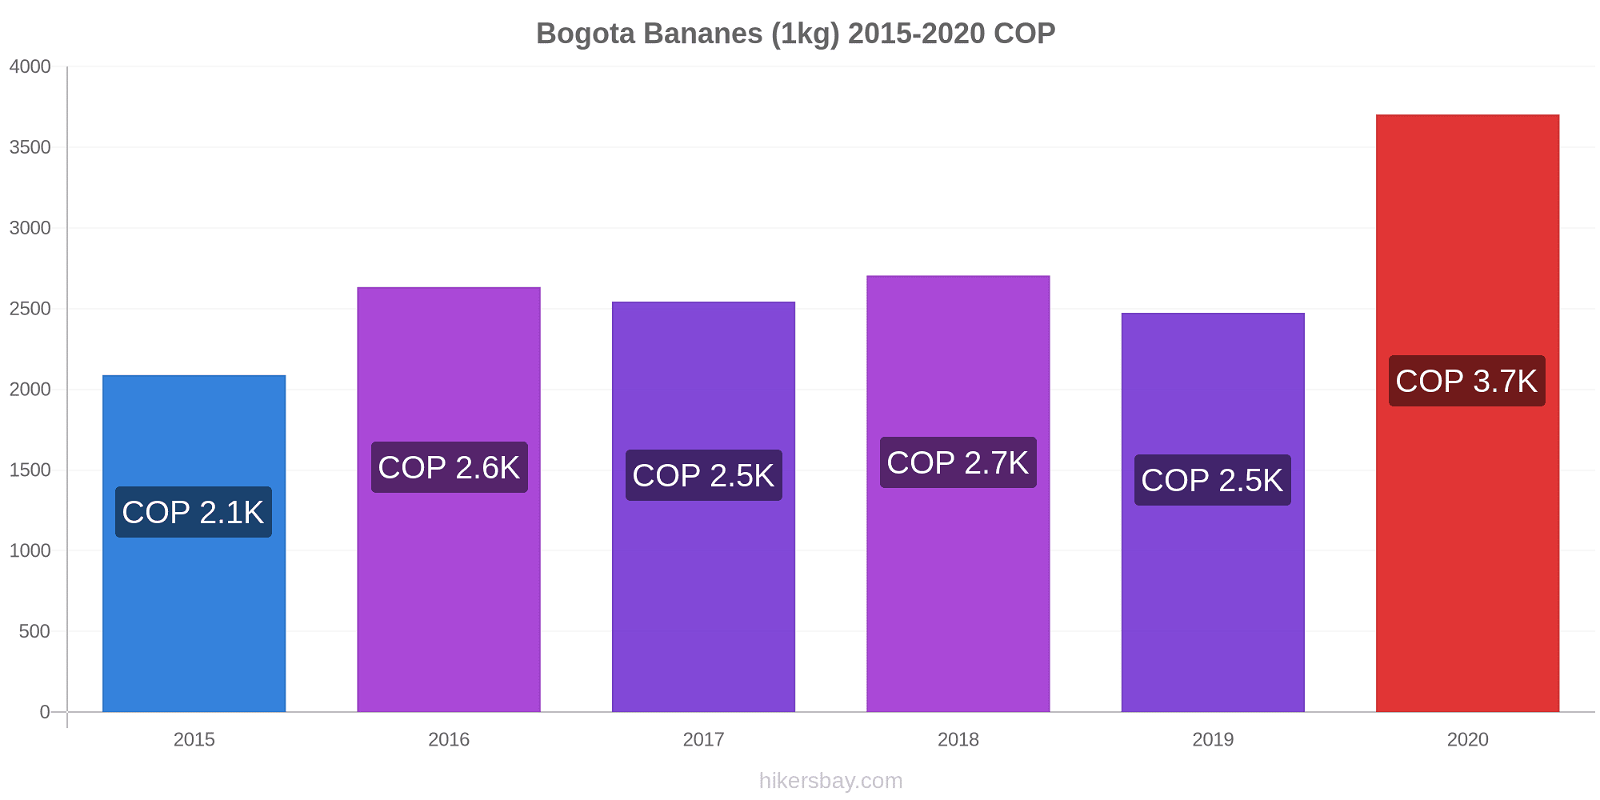 Bogota changements de prix Bananes (1kg) hikersbay.com